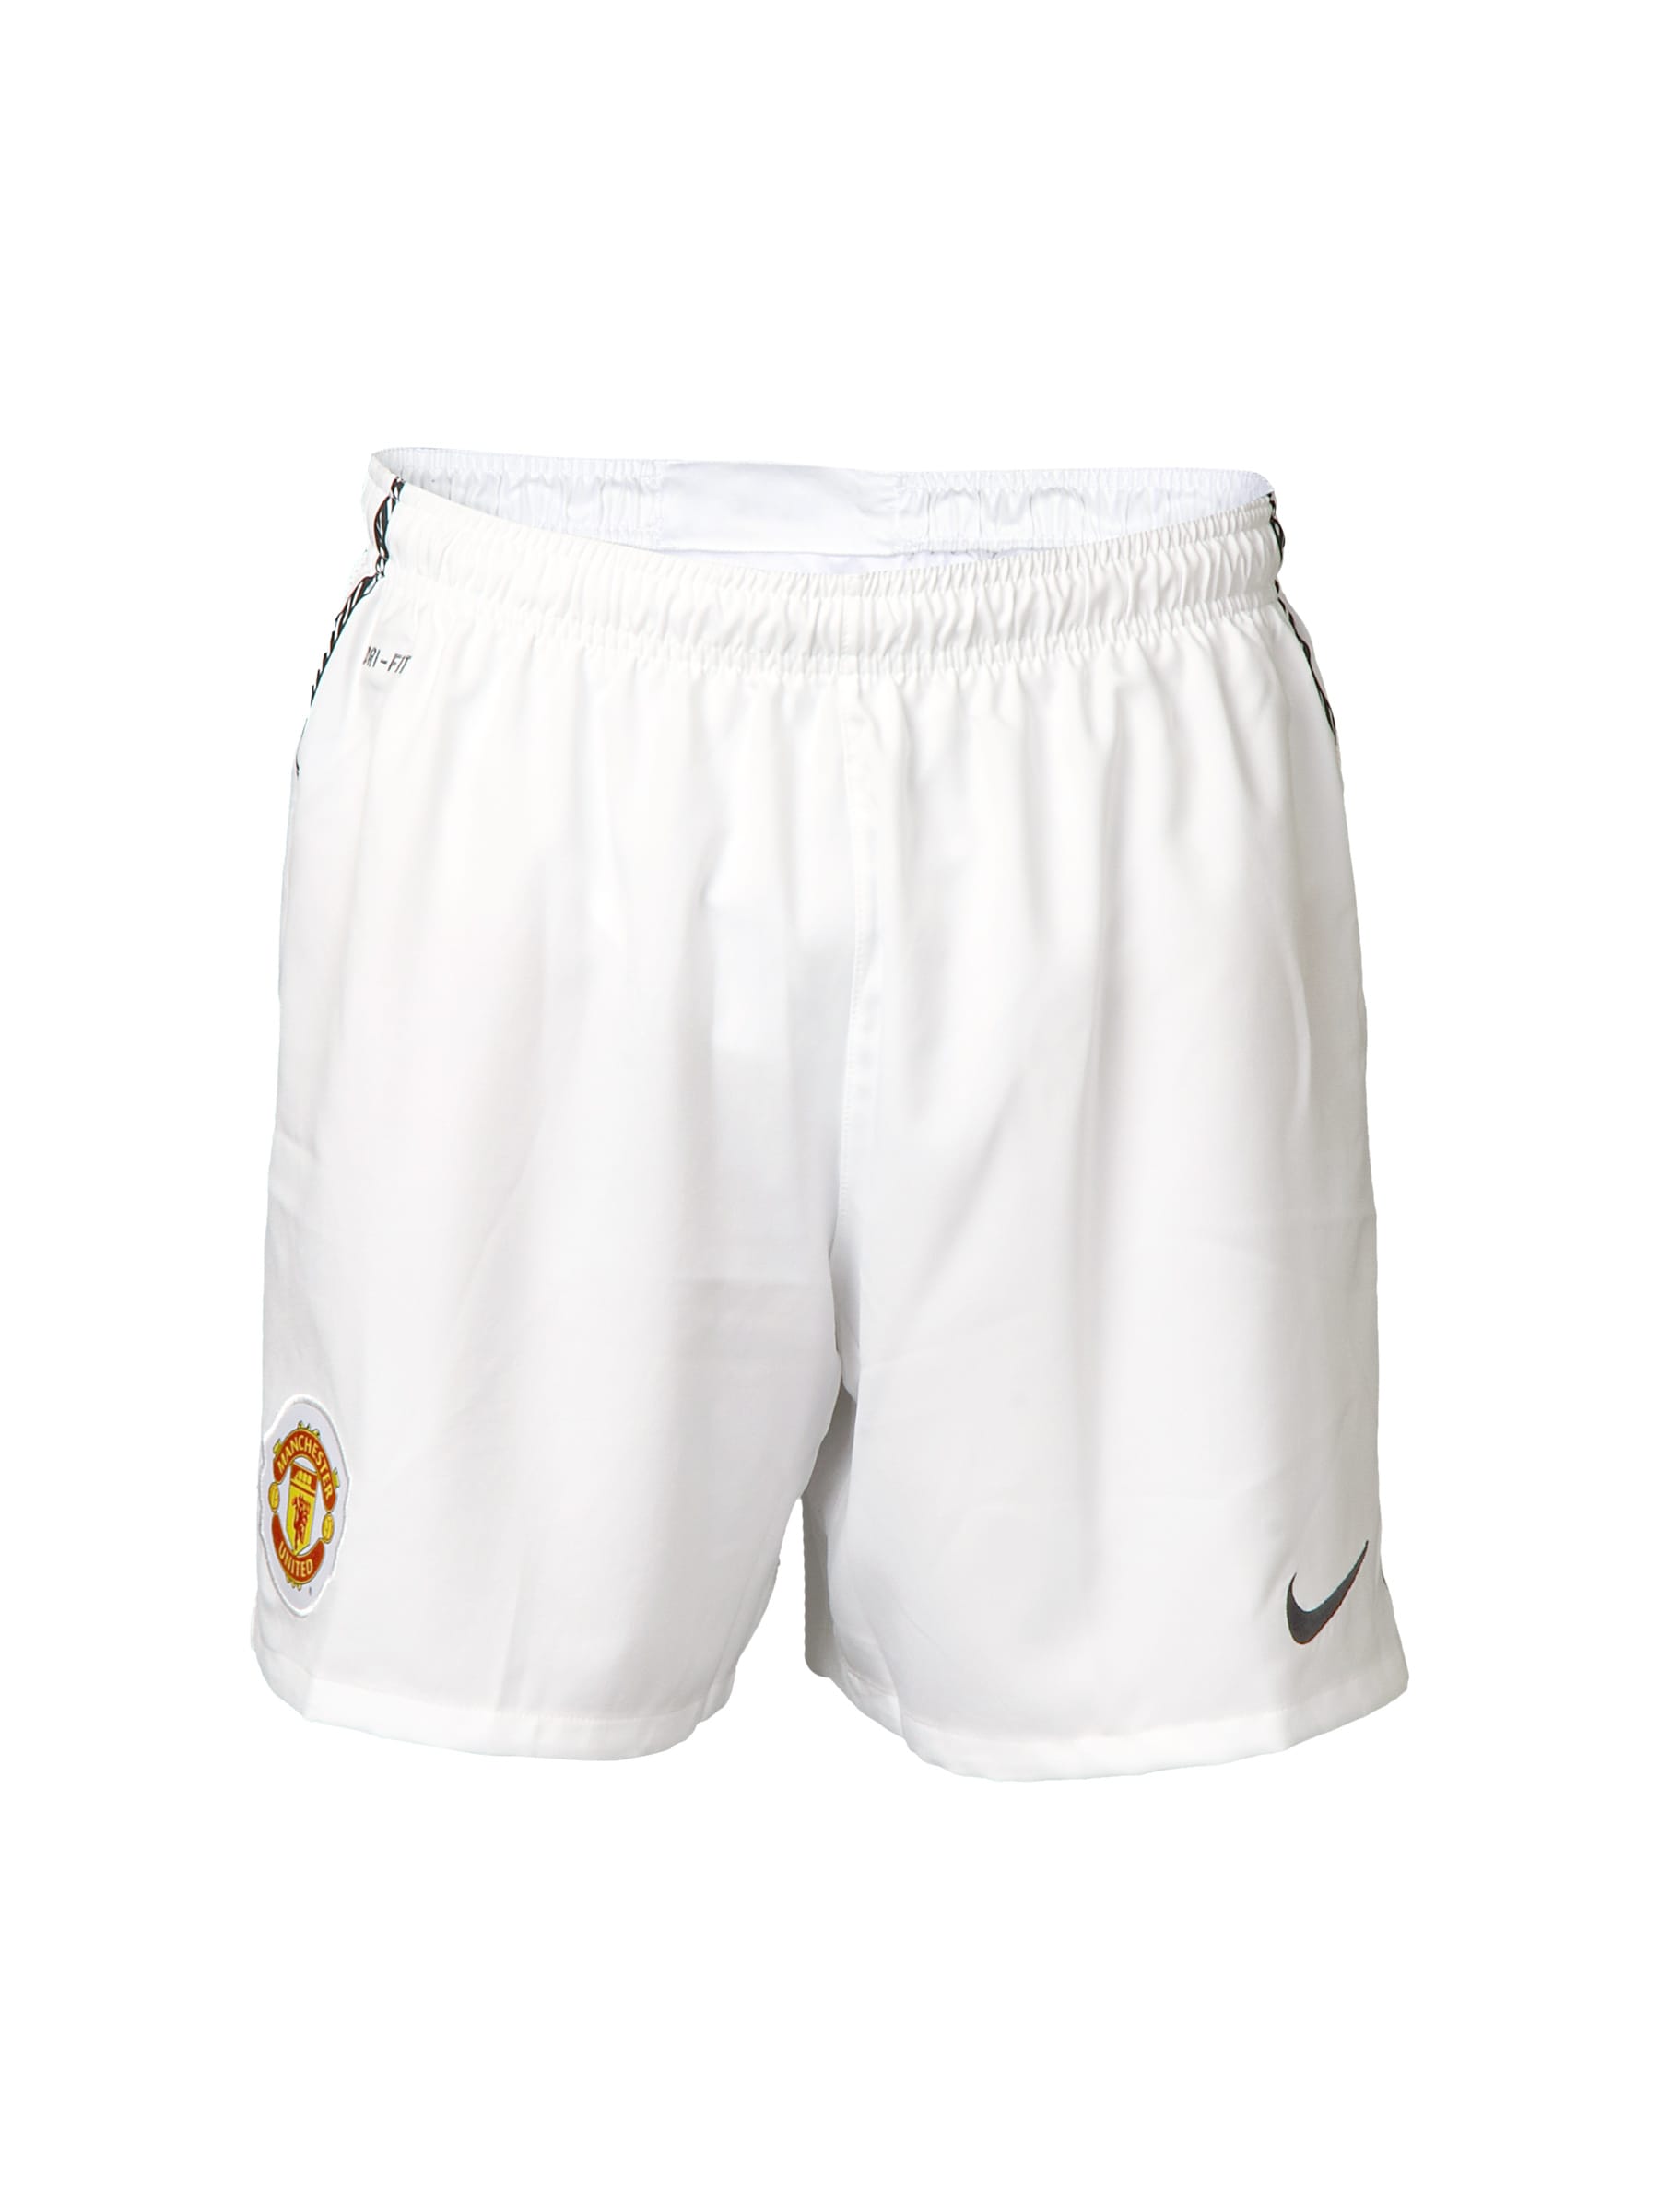 Nike Men Ftbll/Socc shorts White Shorts